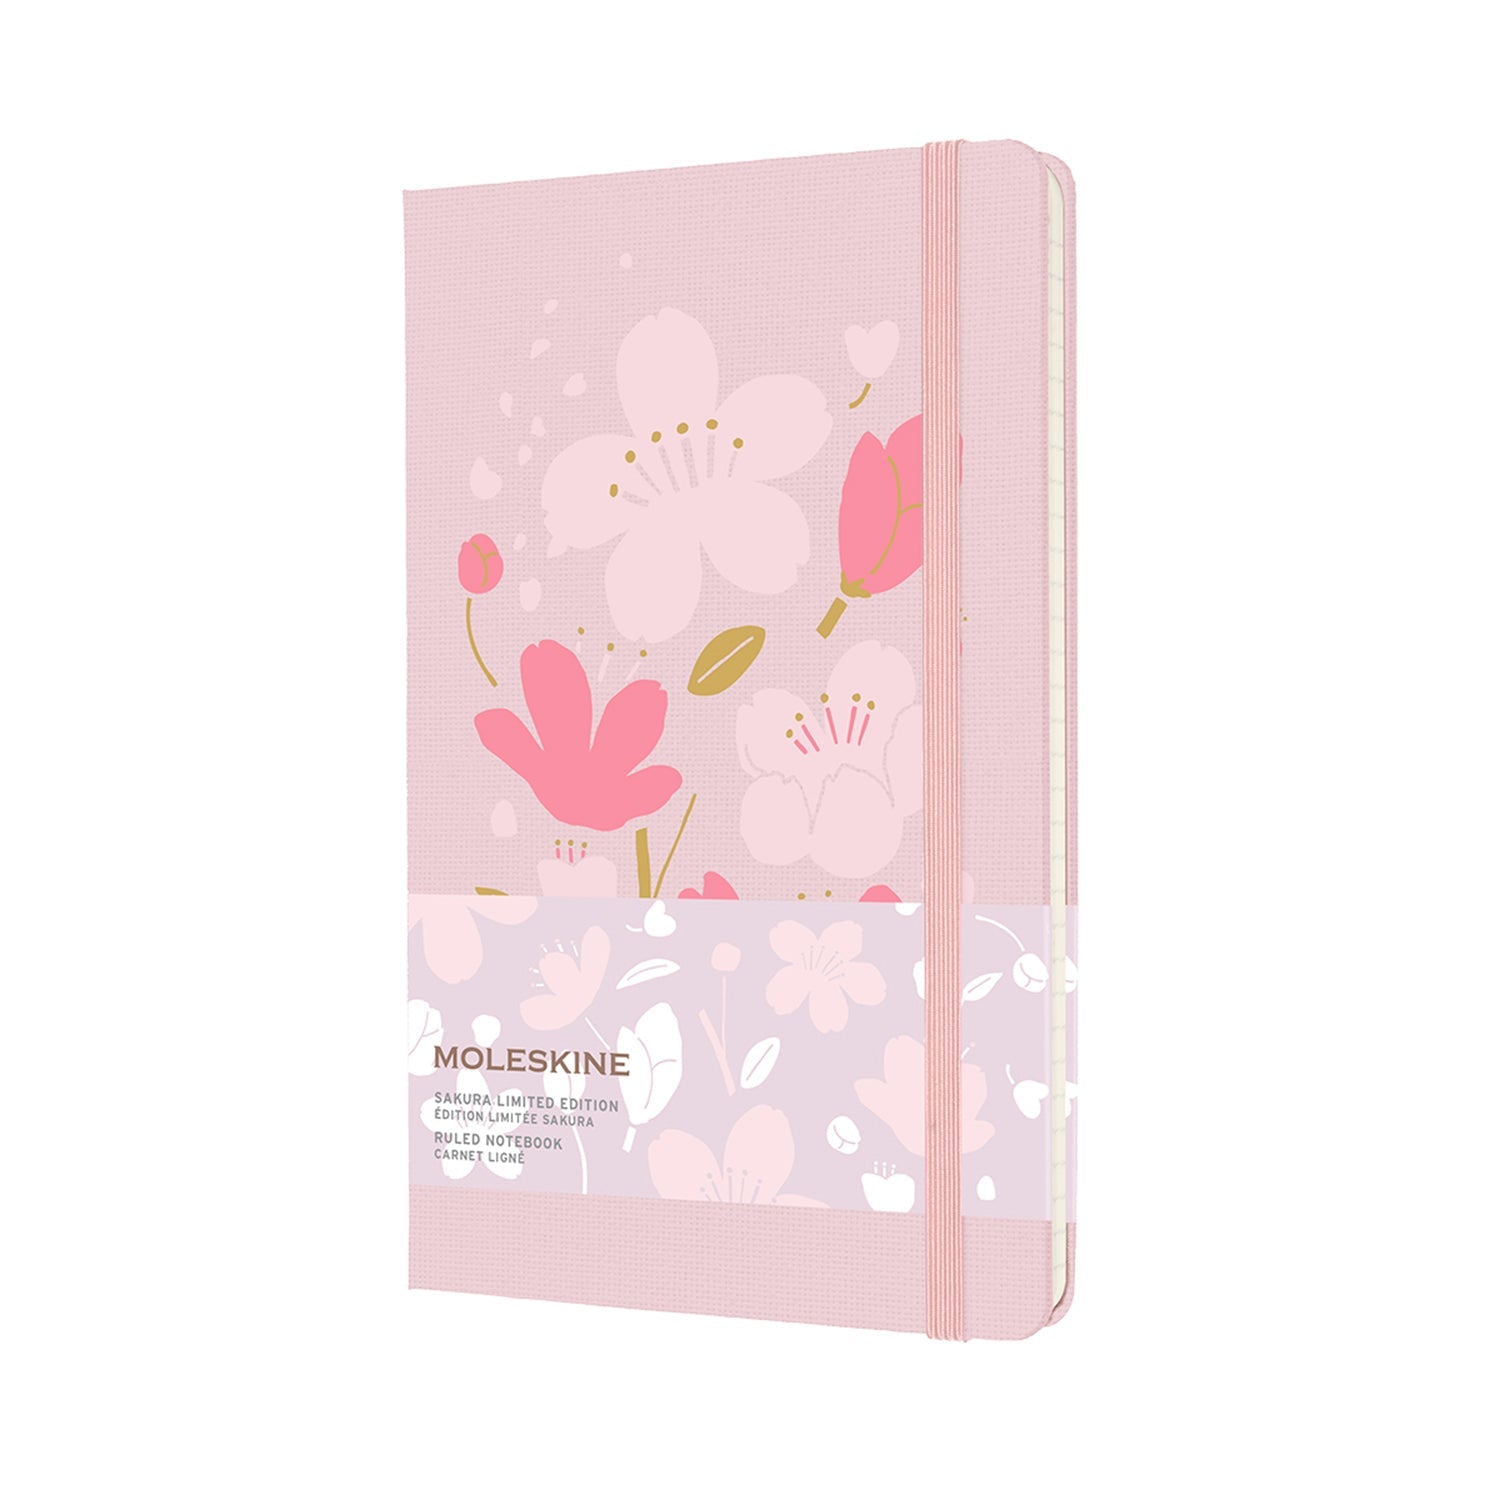 Moleskine Sakura Limited Edition Notebook - Large Ruled Hard Cover trendygifthk